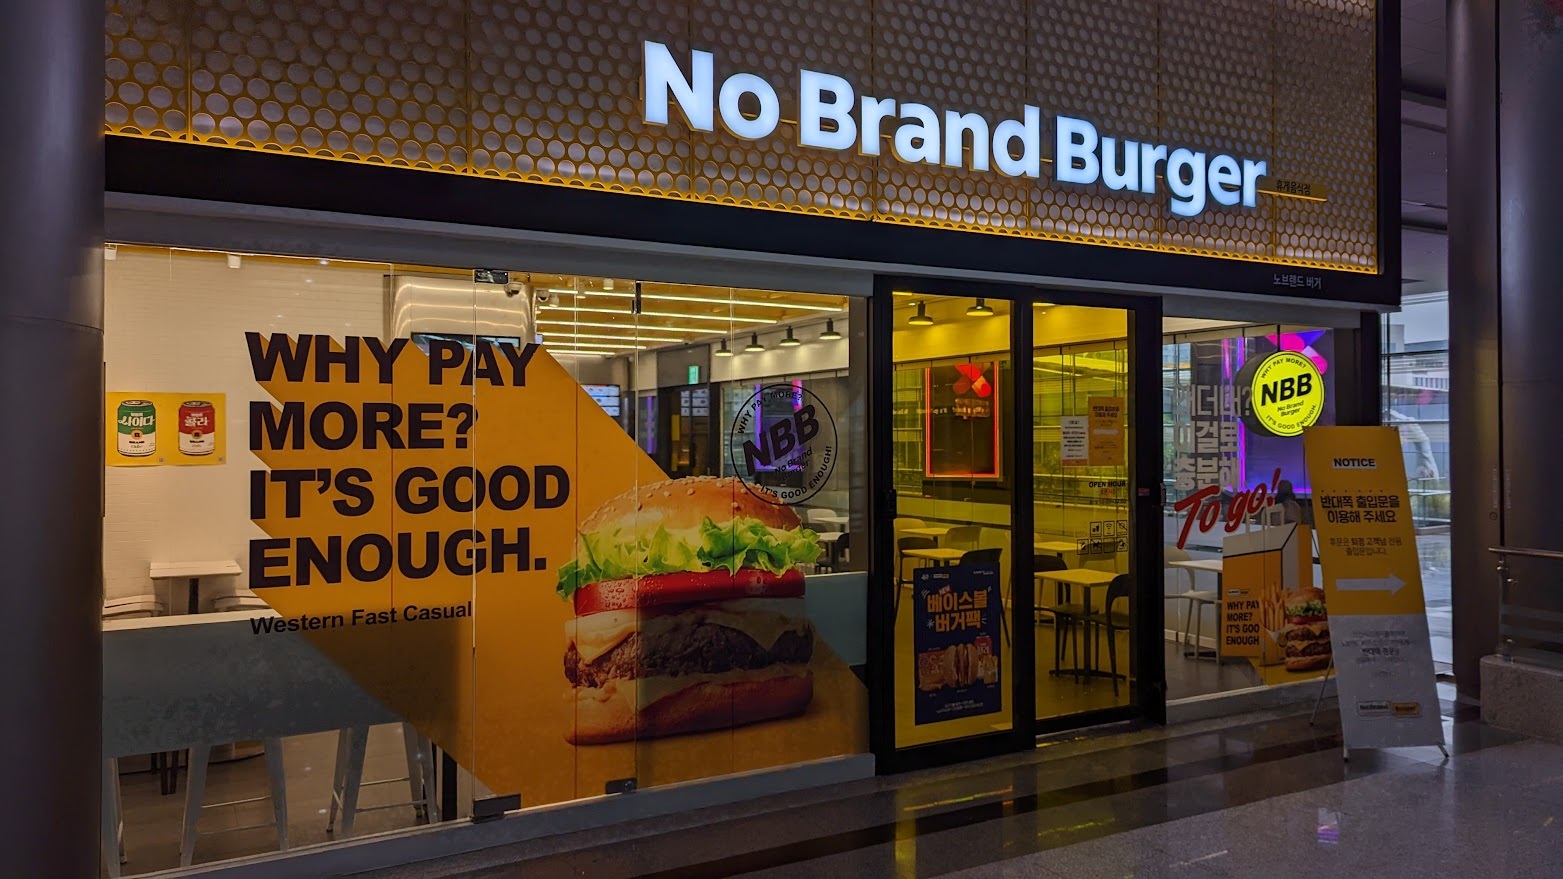 No Brand Burger in Seoul (Image: invidis)